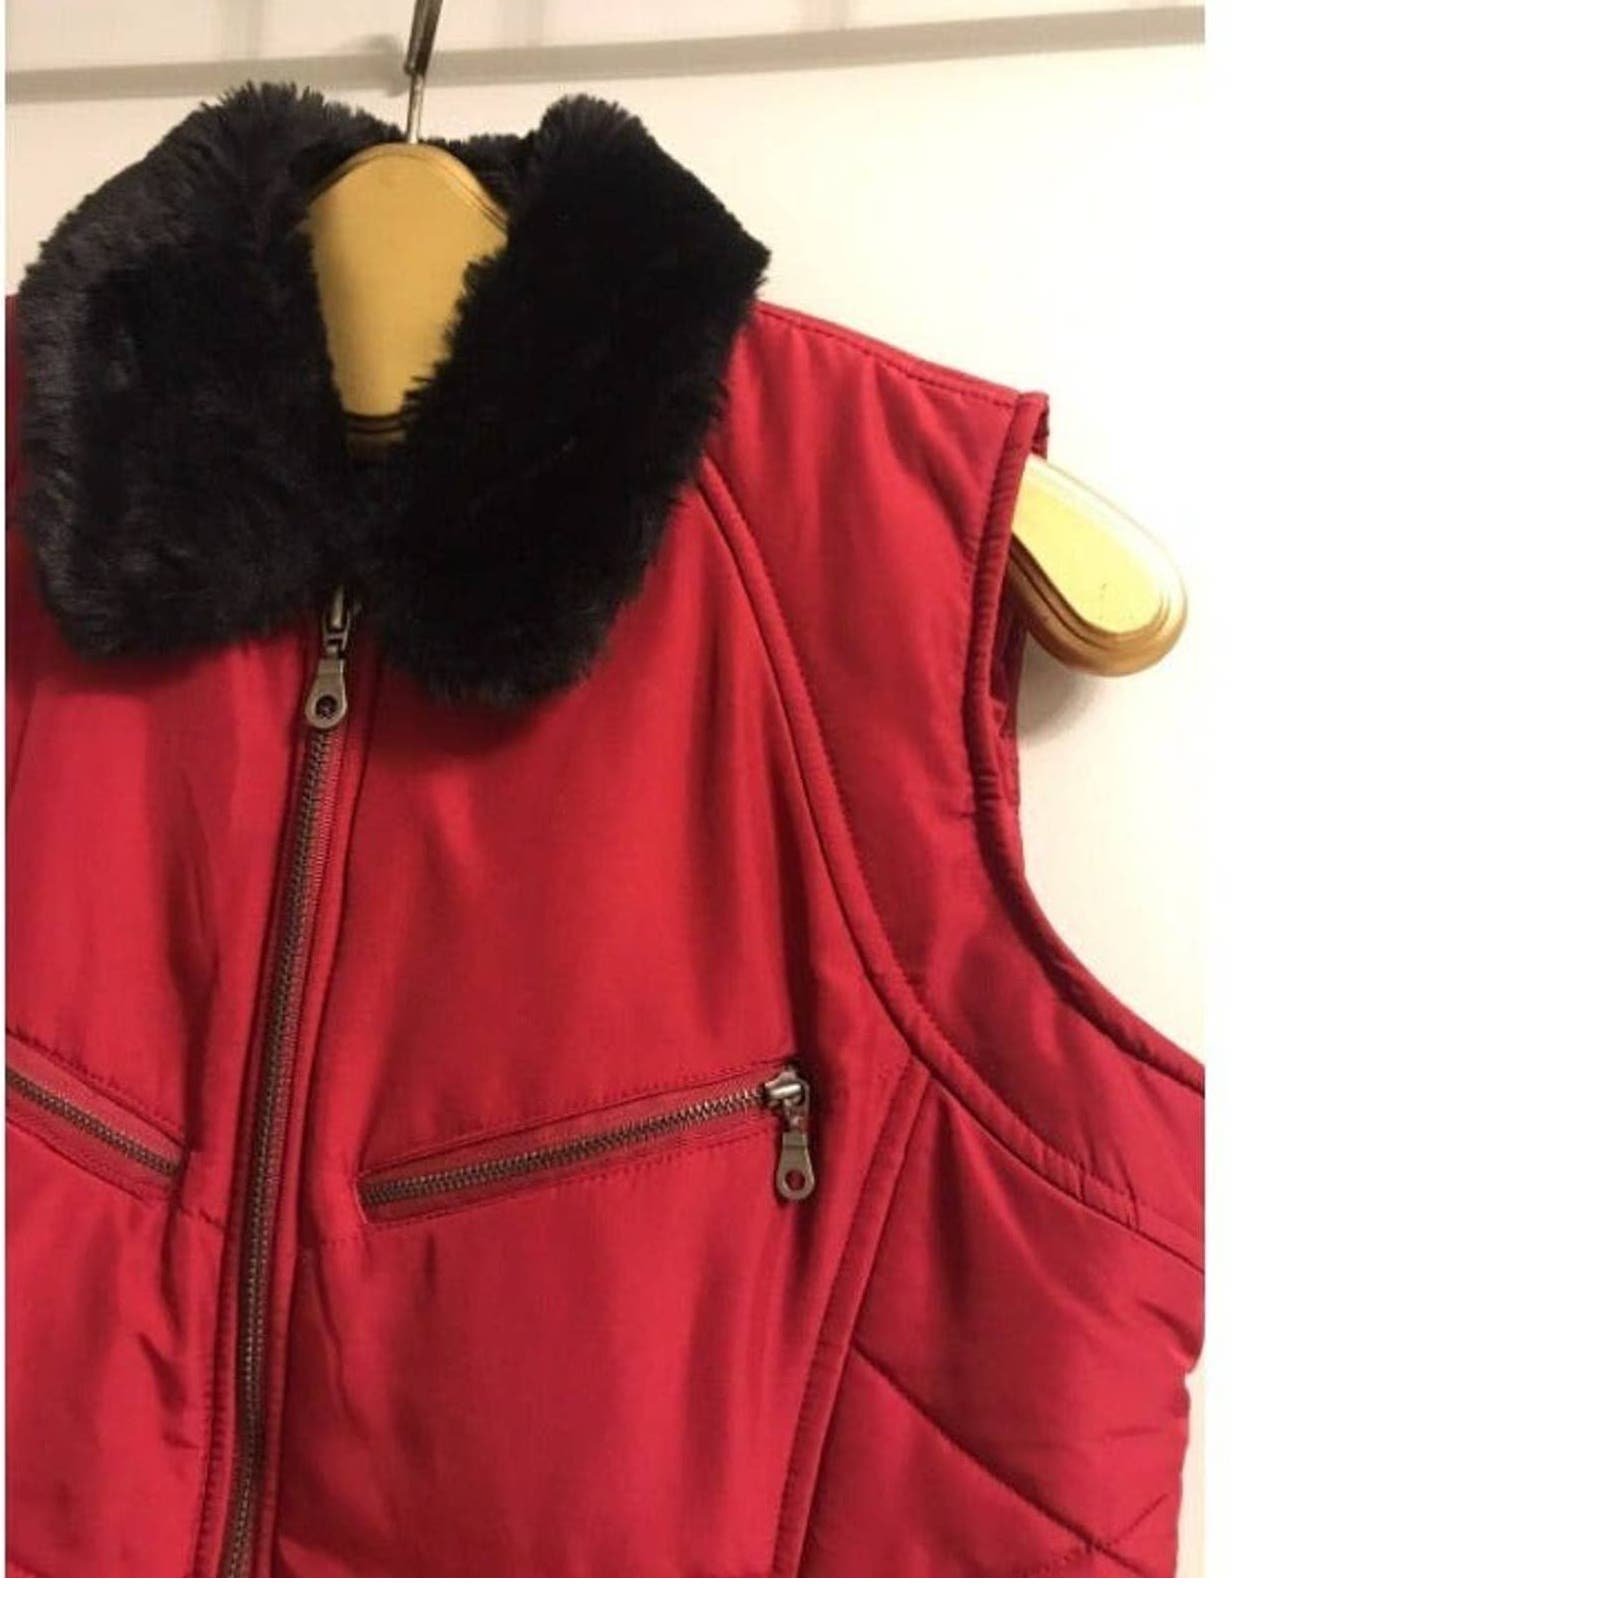 ND women’s full zipper Vest jacket  red sz mp sleeveless faux fur collar neck 2FPfyih54